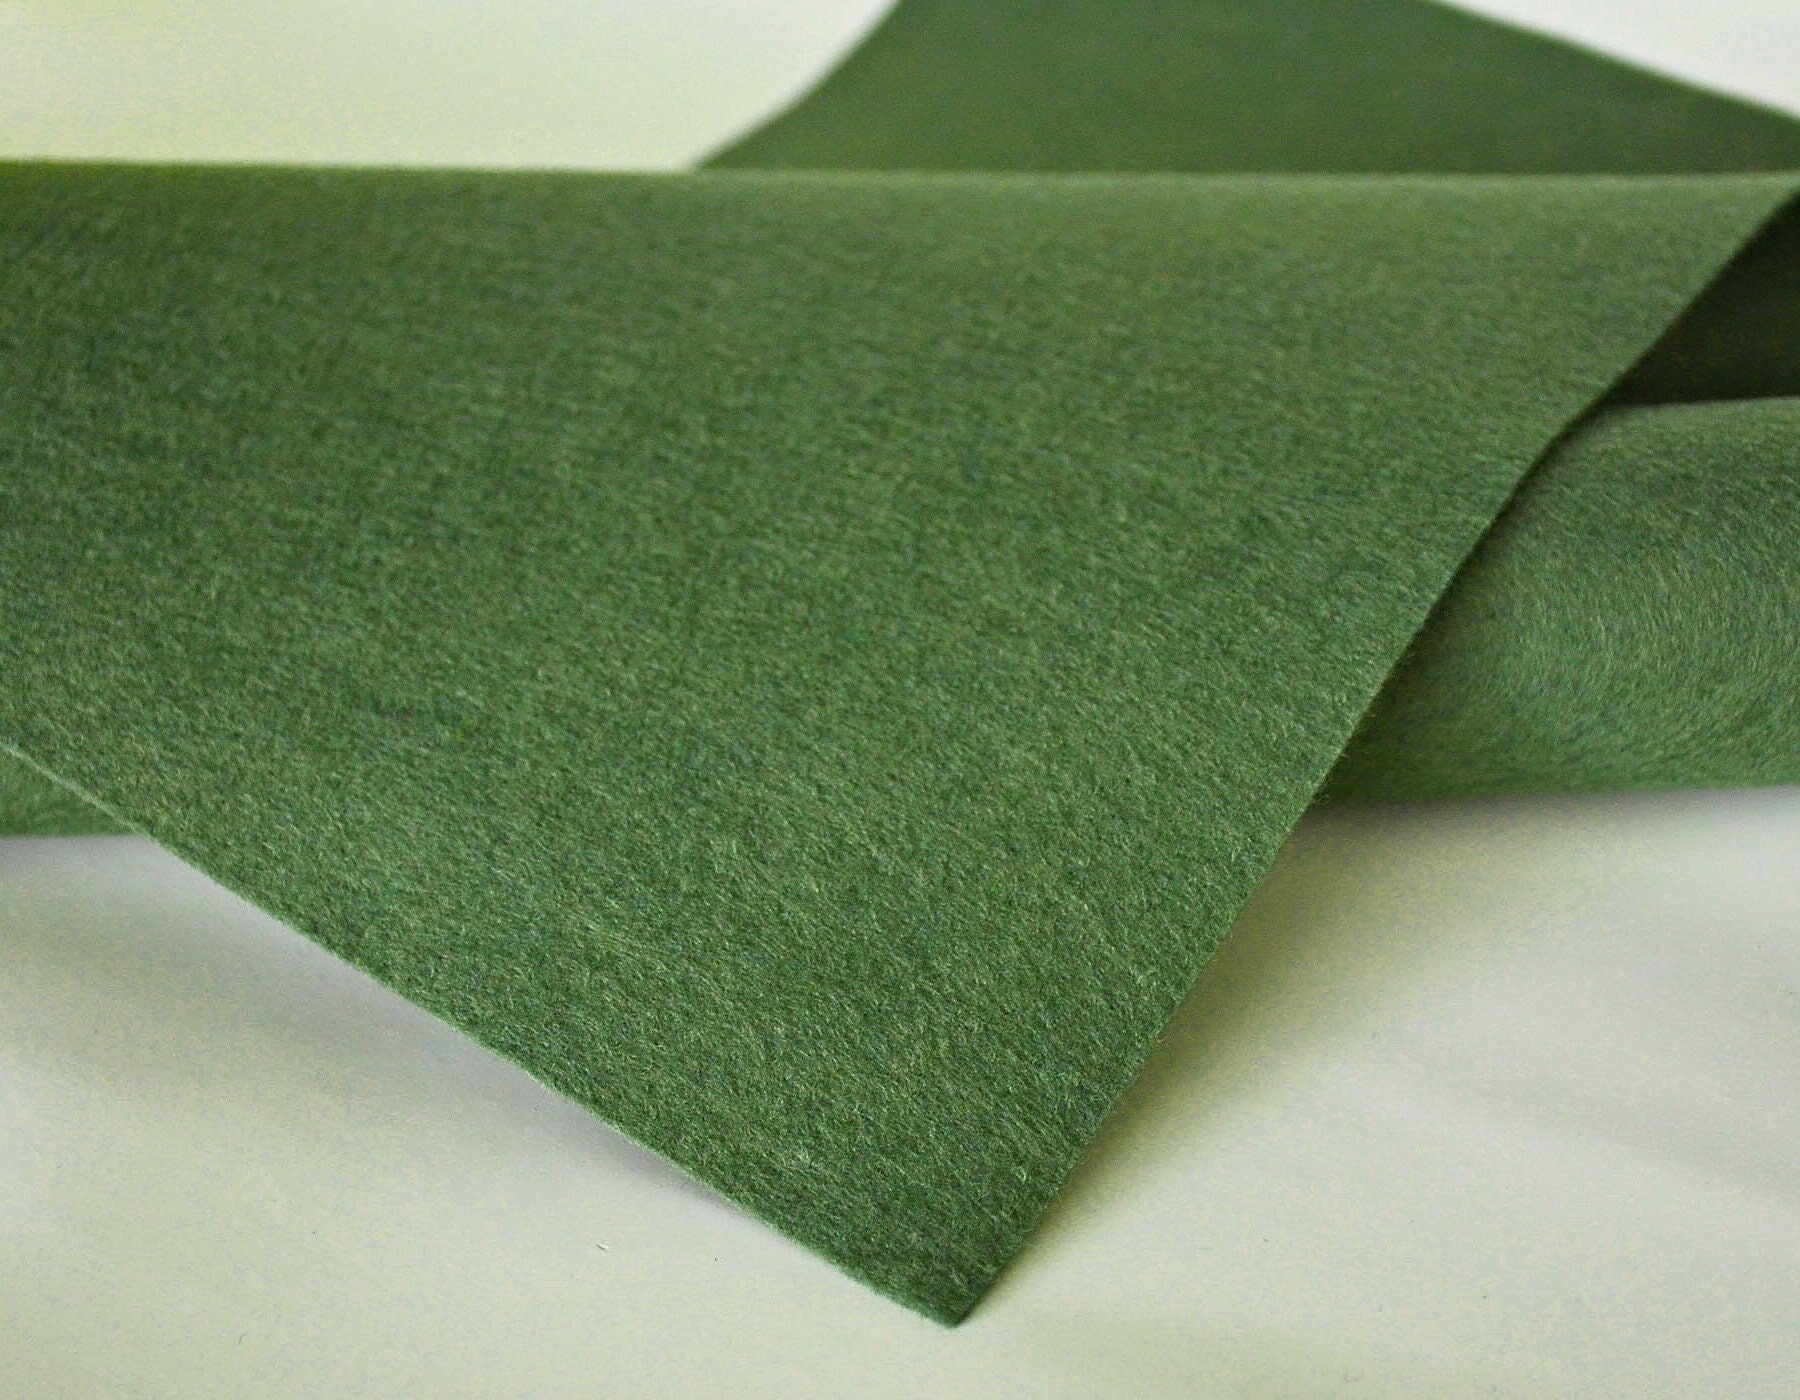 Muddy Green Felt Sheets - Woollyfelt